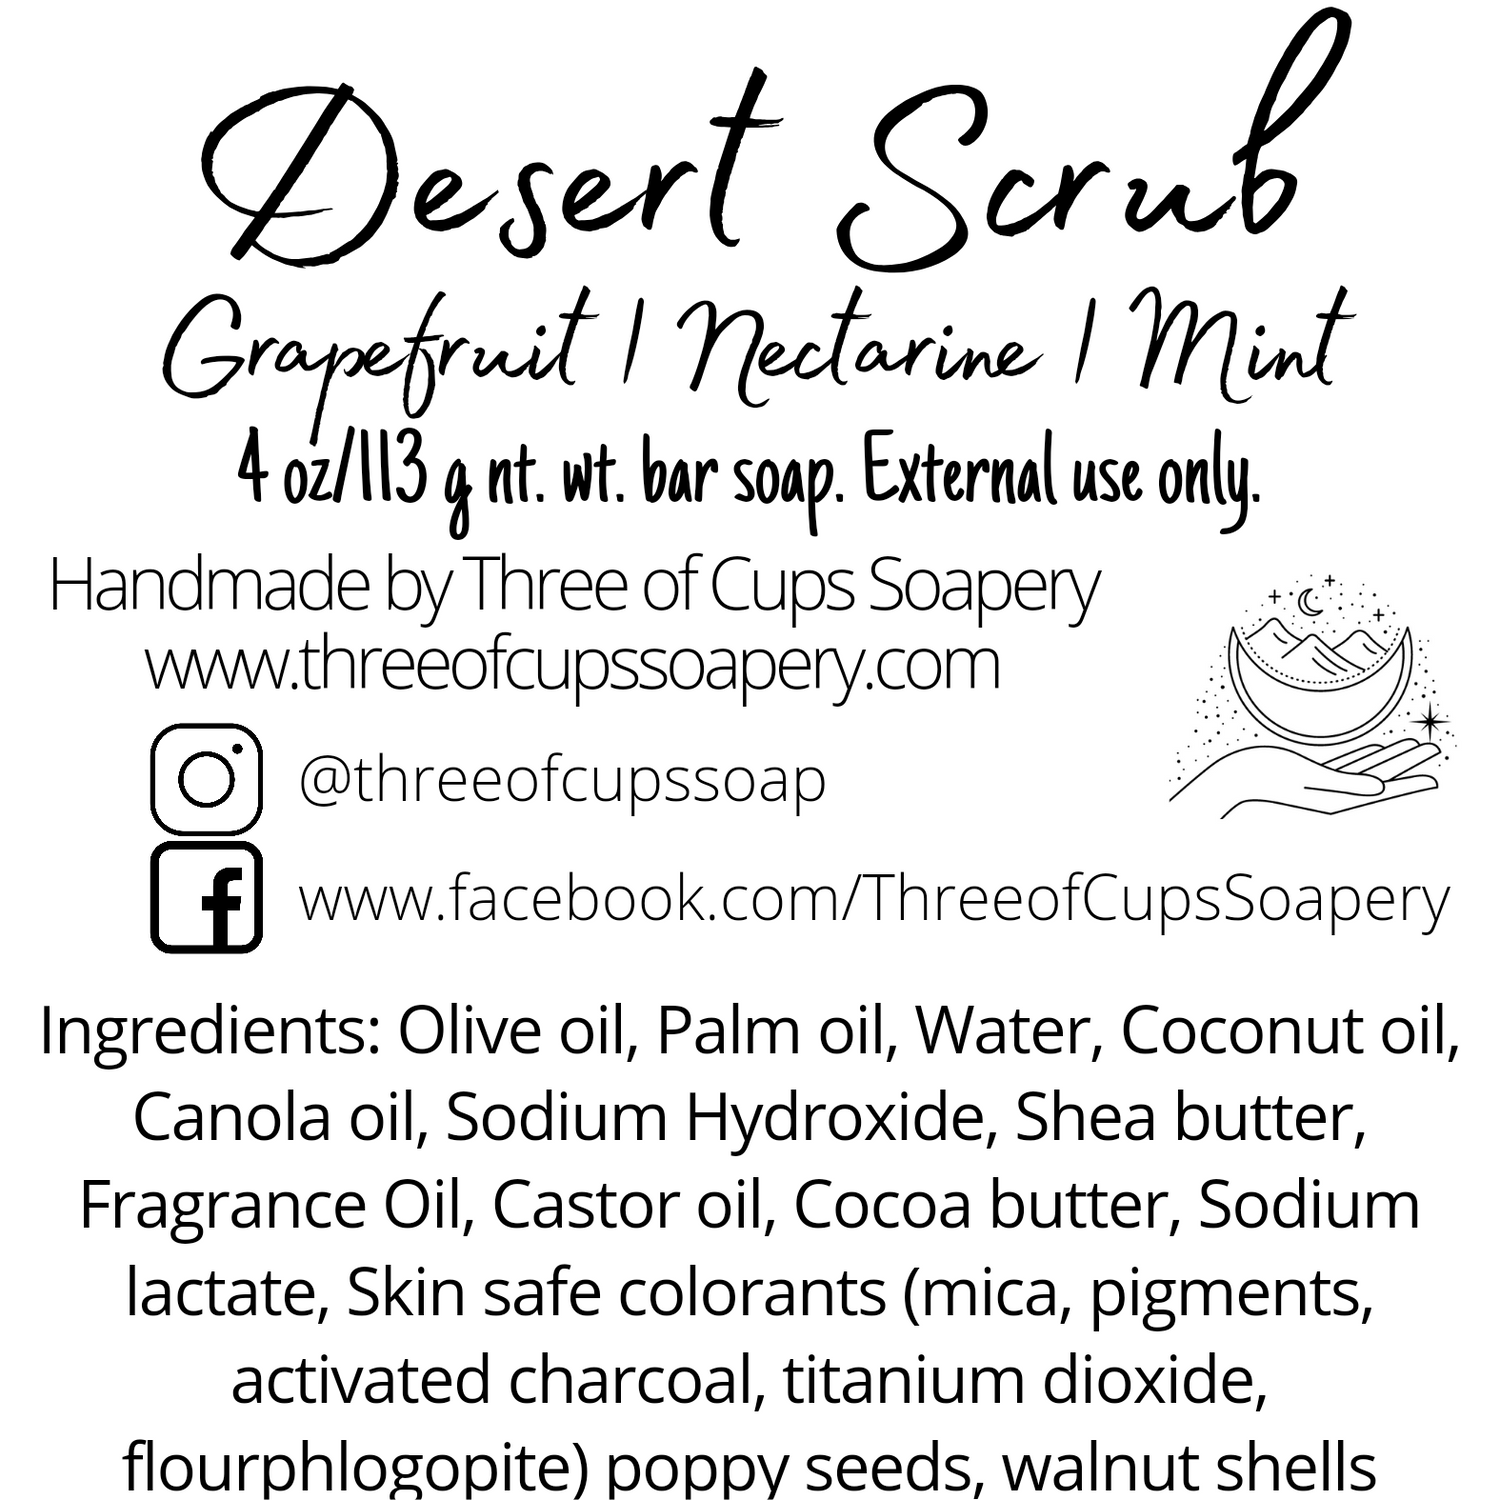 Desert Scrub soap label